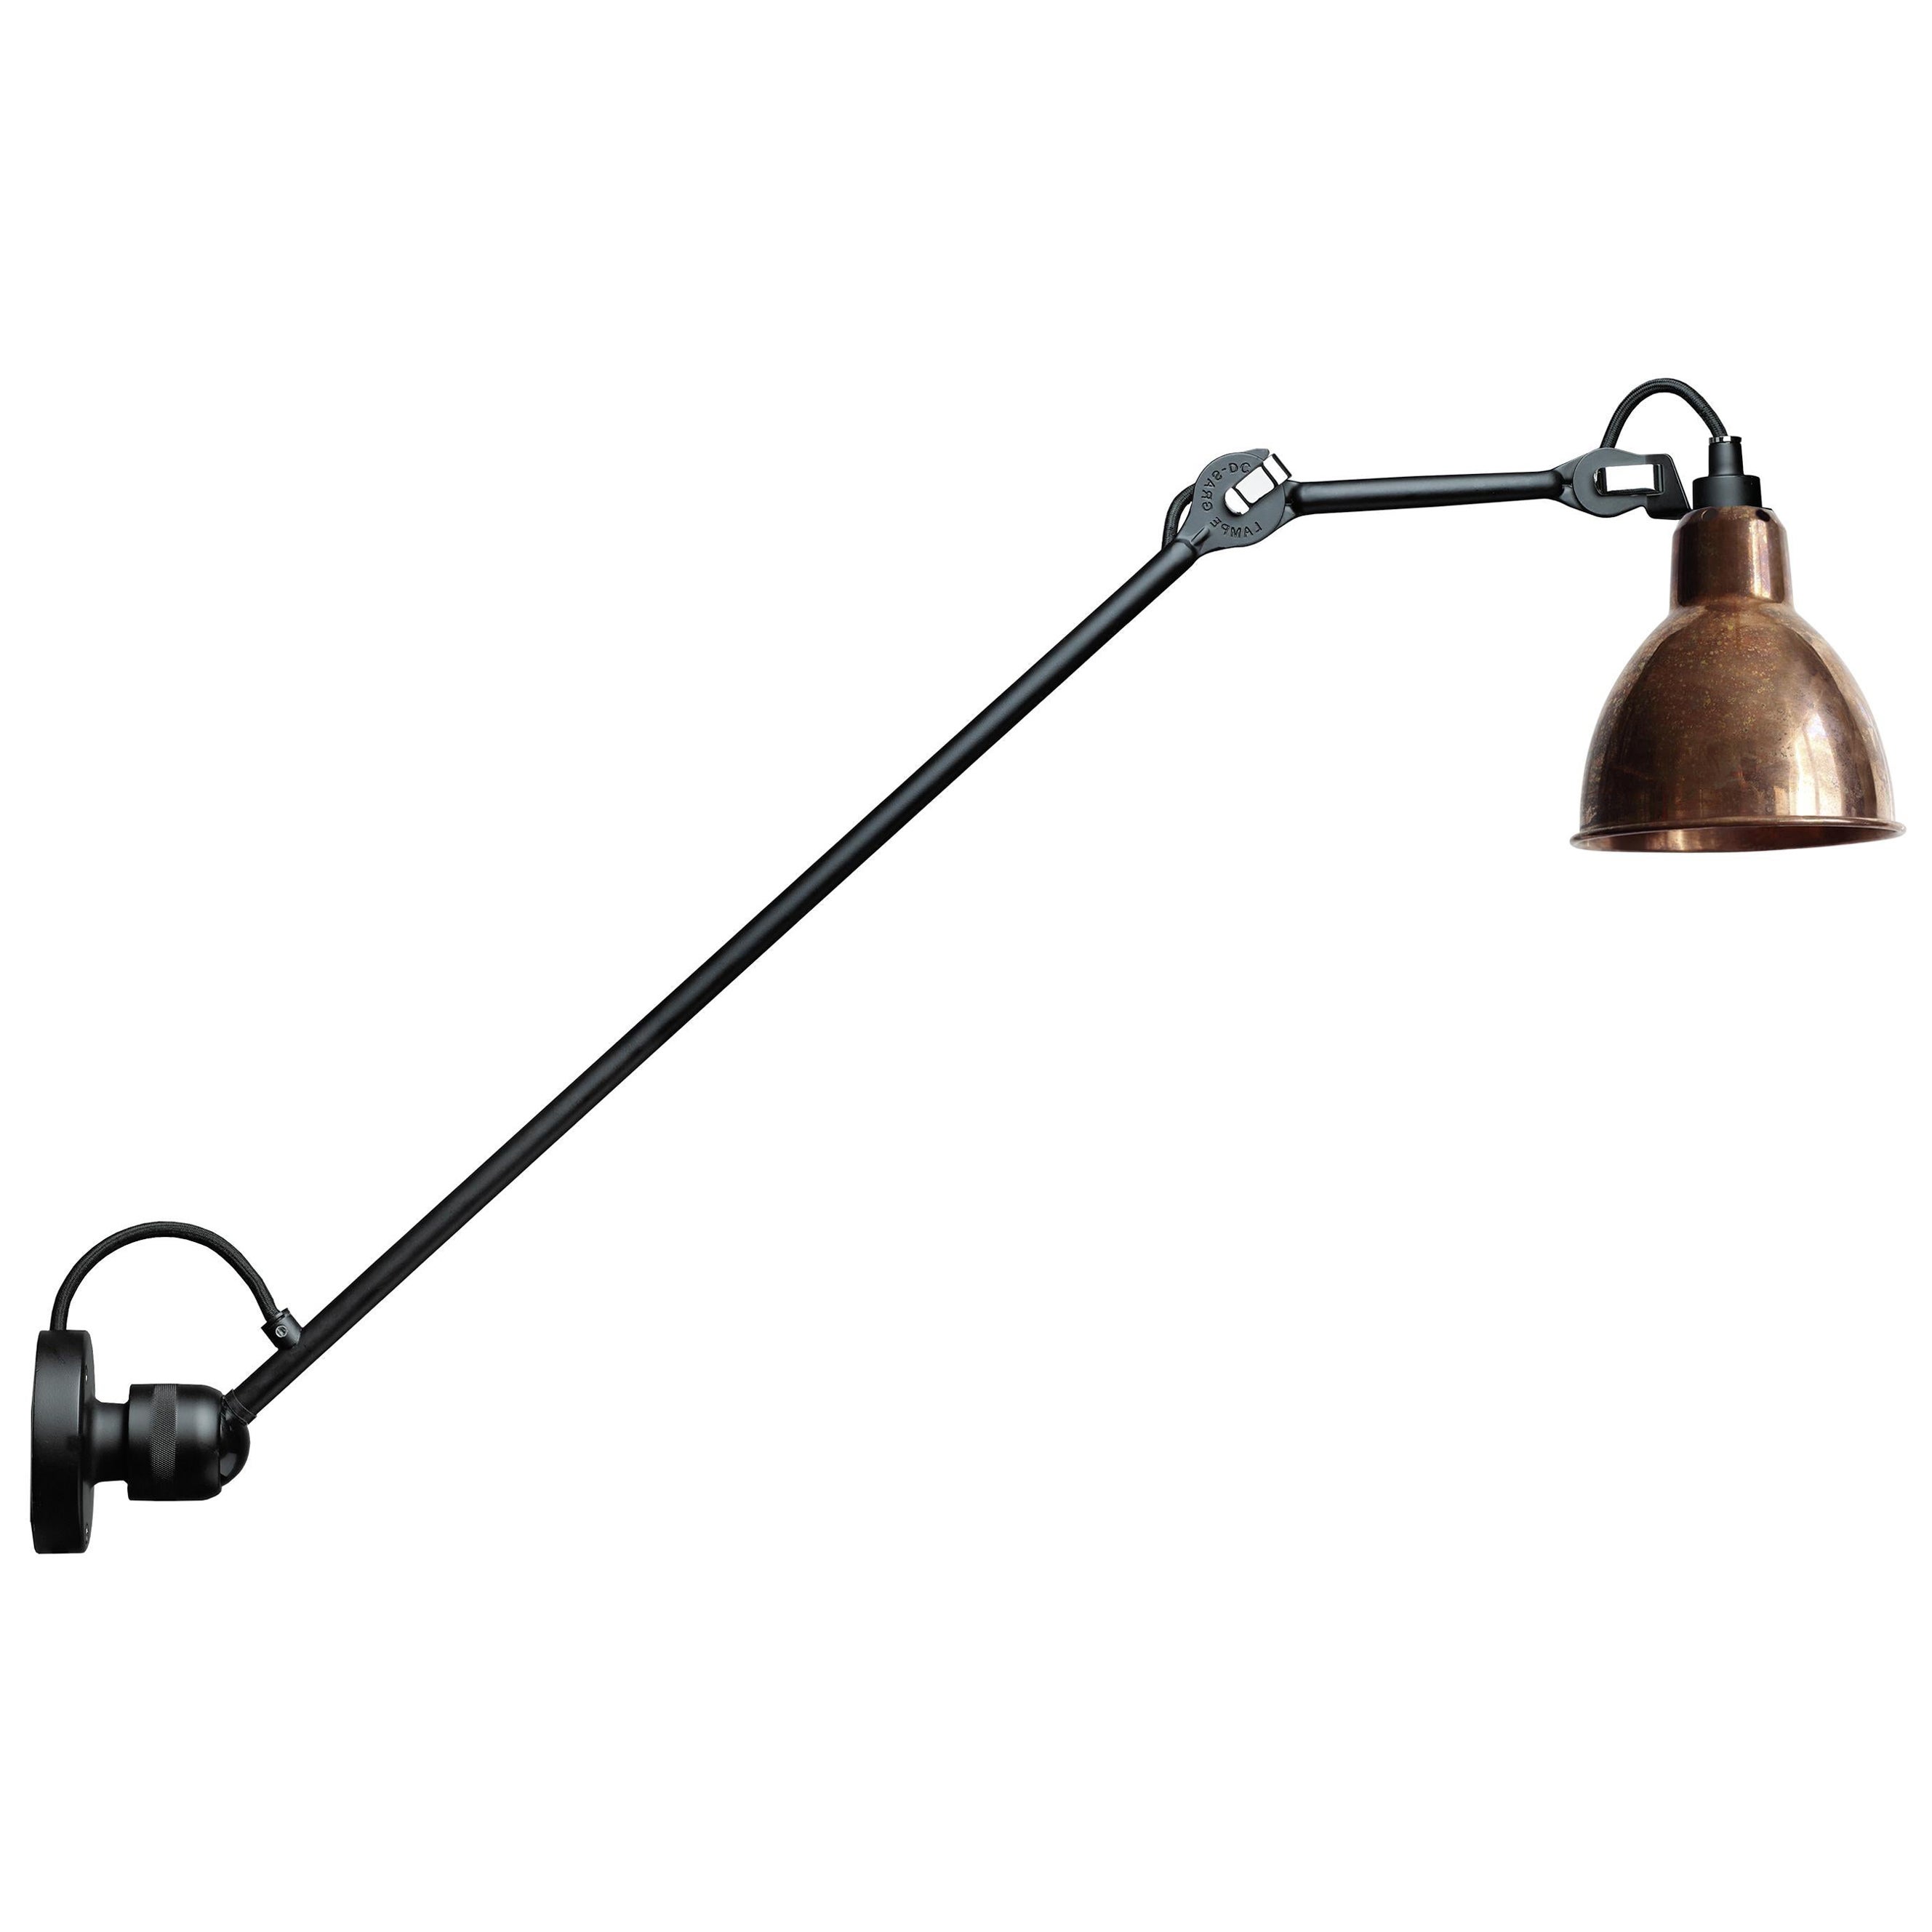 DCW Editions La Lampe Gras N°304 L60 Wall Lamp in Black Arm & Raw Copper Shade